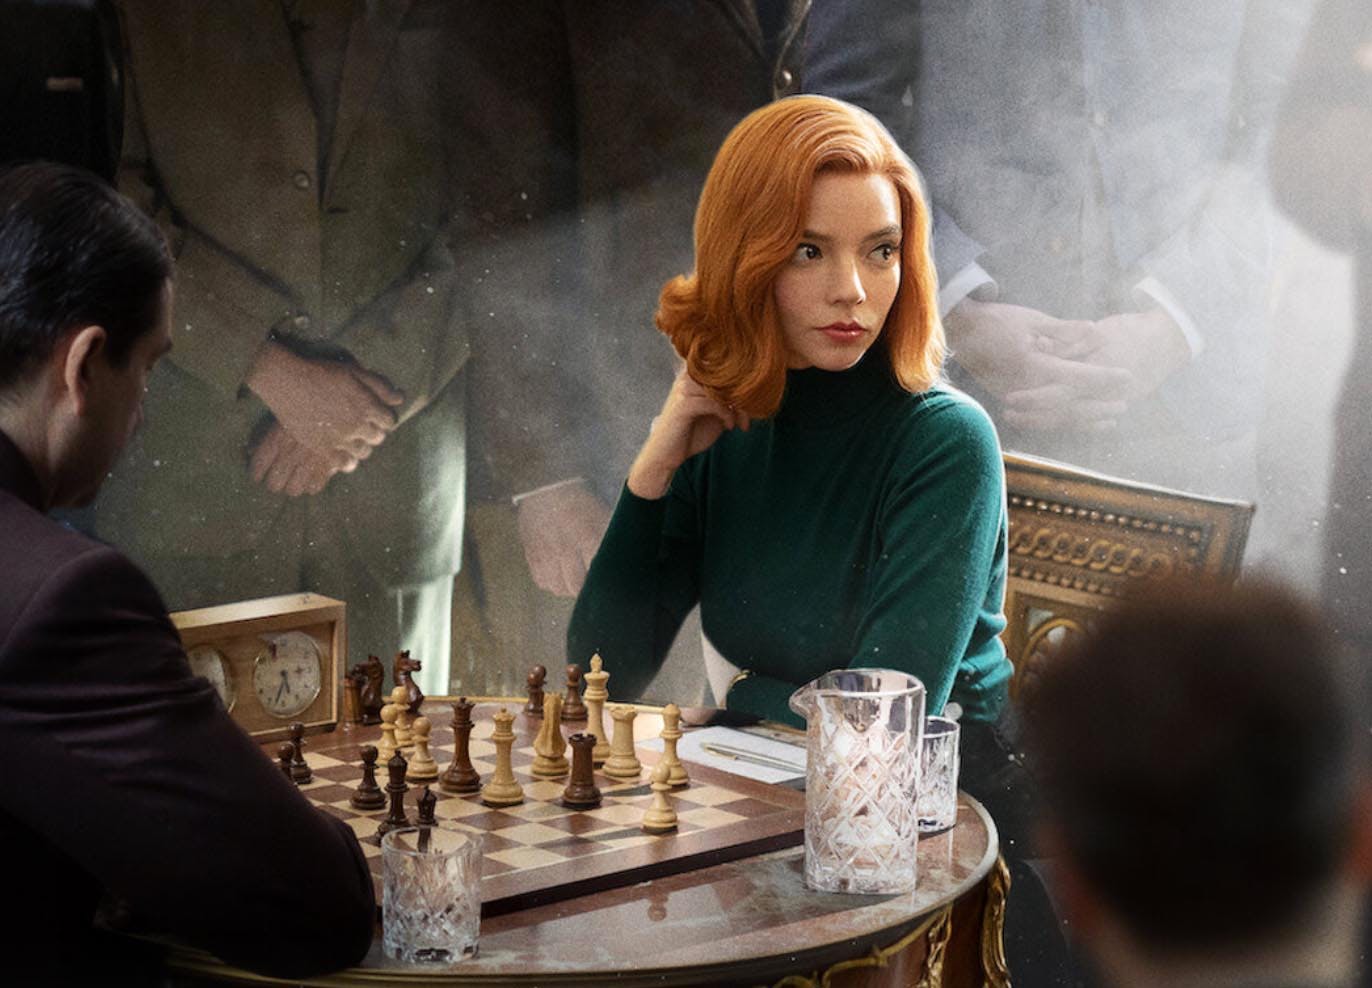 Nona Gaprindashvili, lenda do xadrez, processa Netflix pela série “The